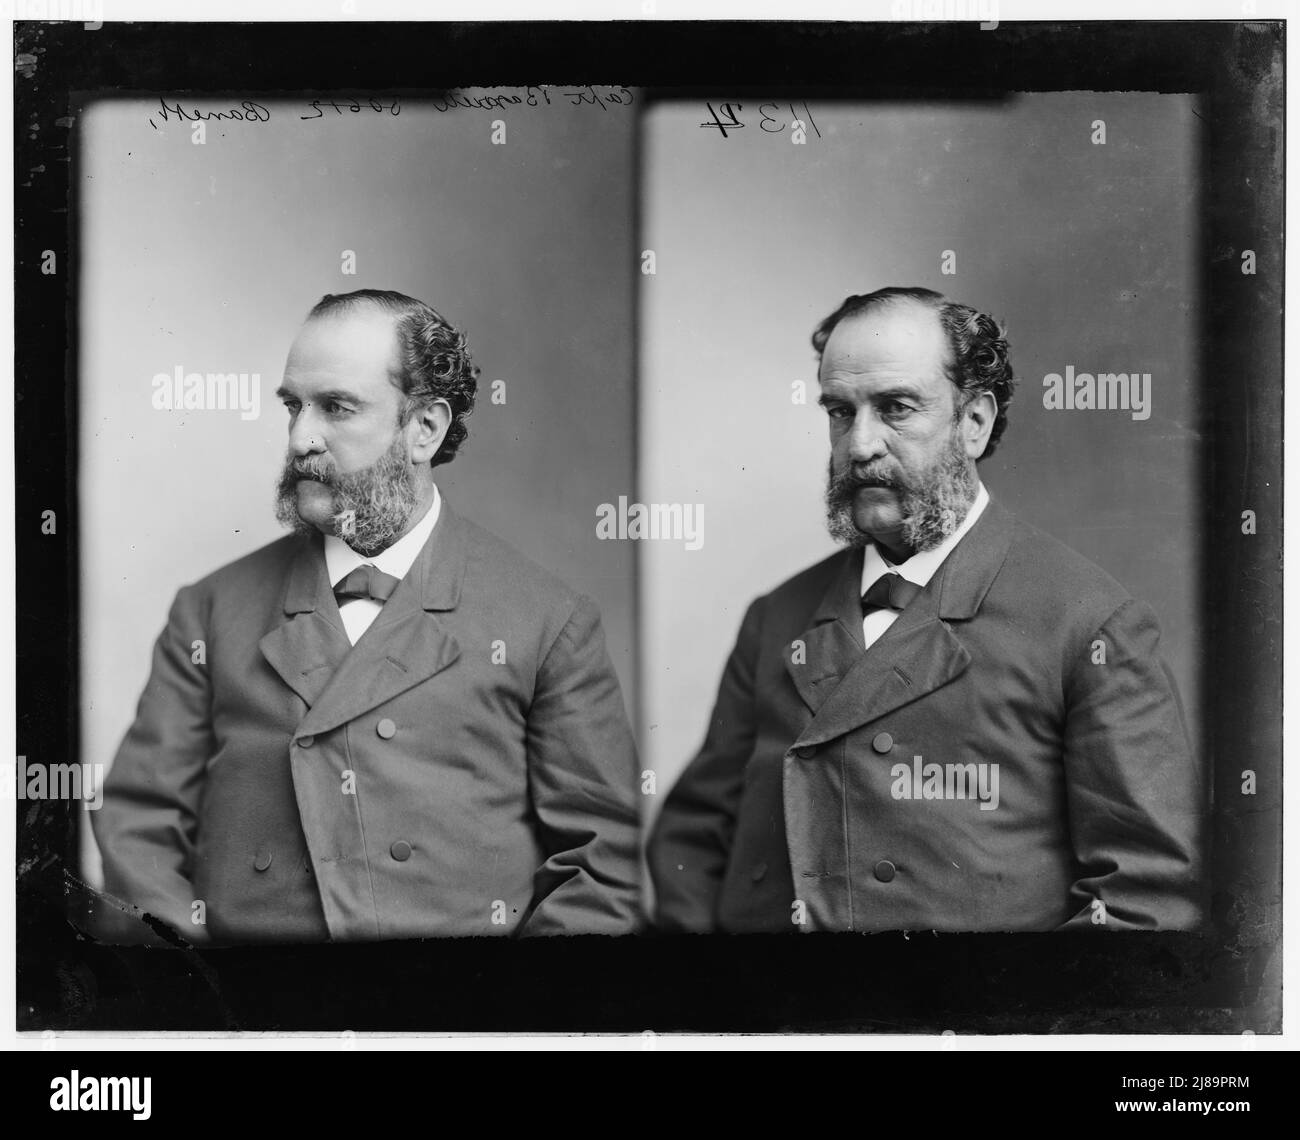 Banett, Hon. M.C. [Member of Congress?], between 1865 and 1880. Stock Photo